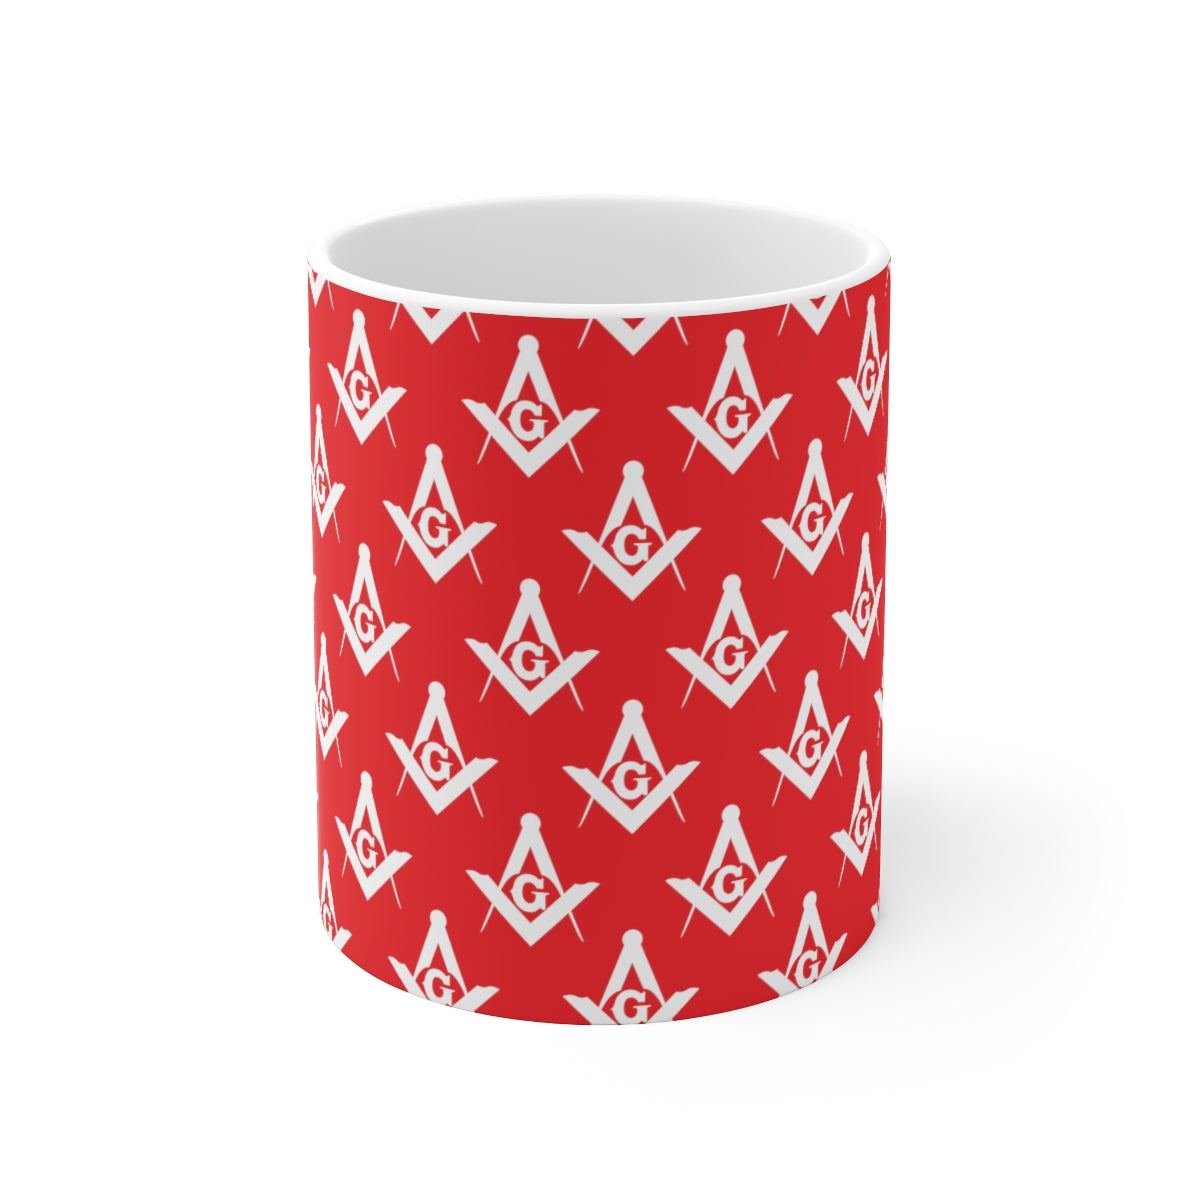 Master Mason Blue Lodge Mug - White and Red Ceramic for Christmas - Bricks Masons